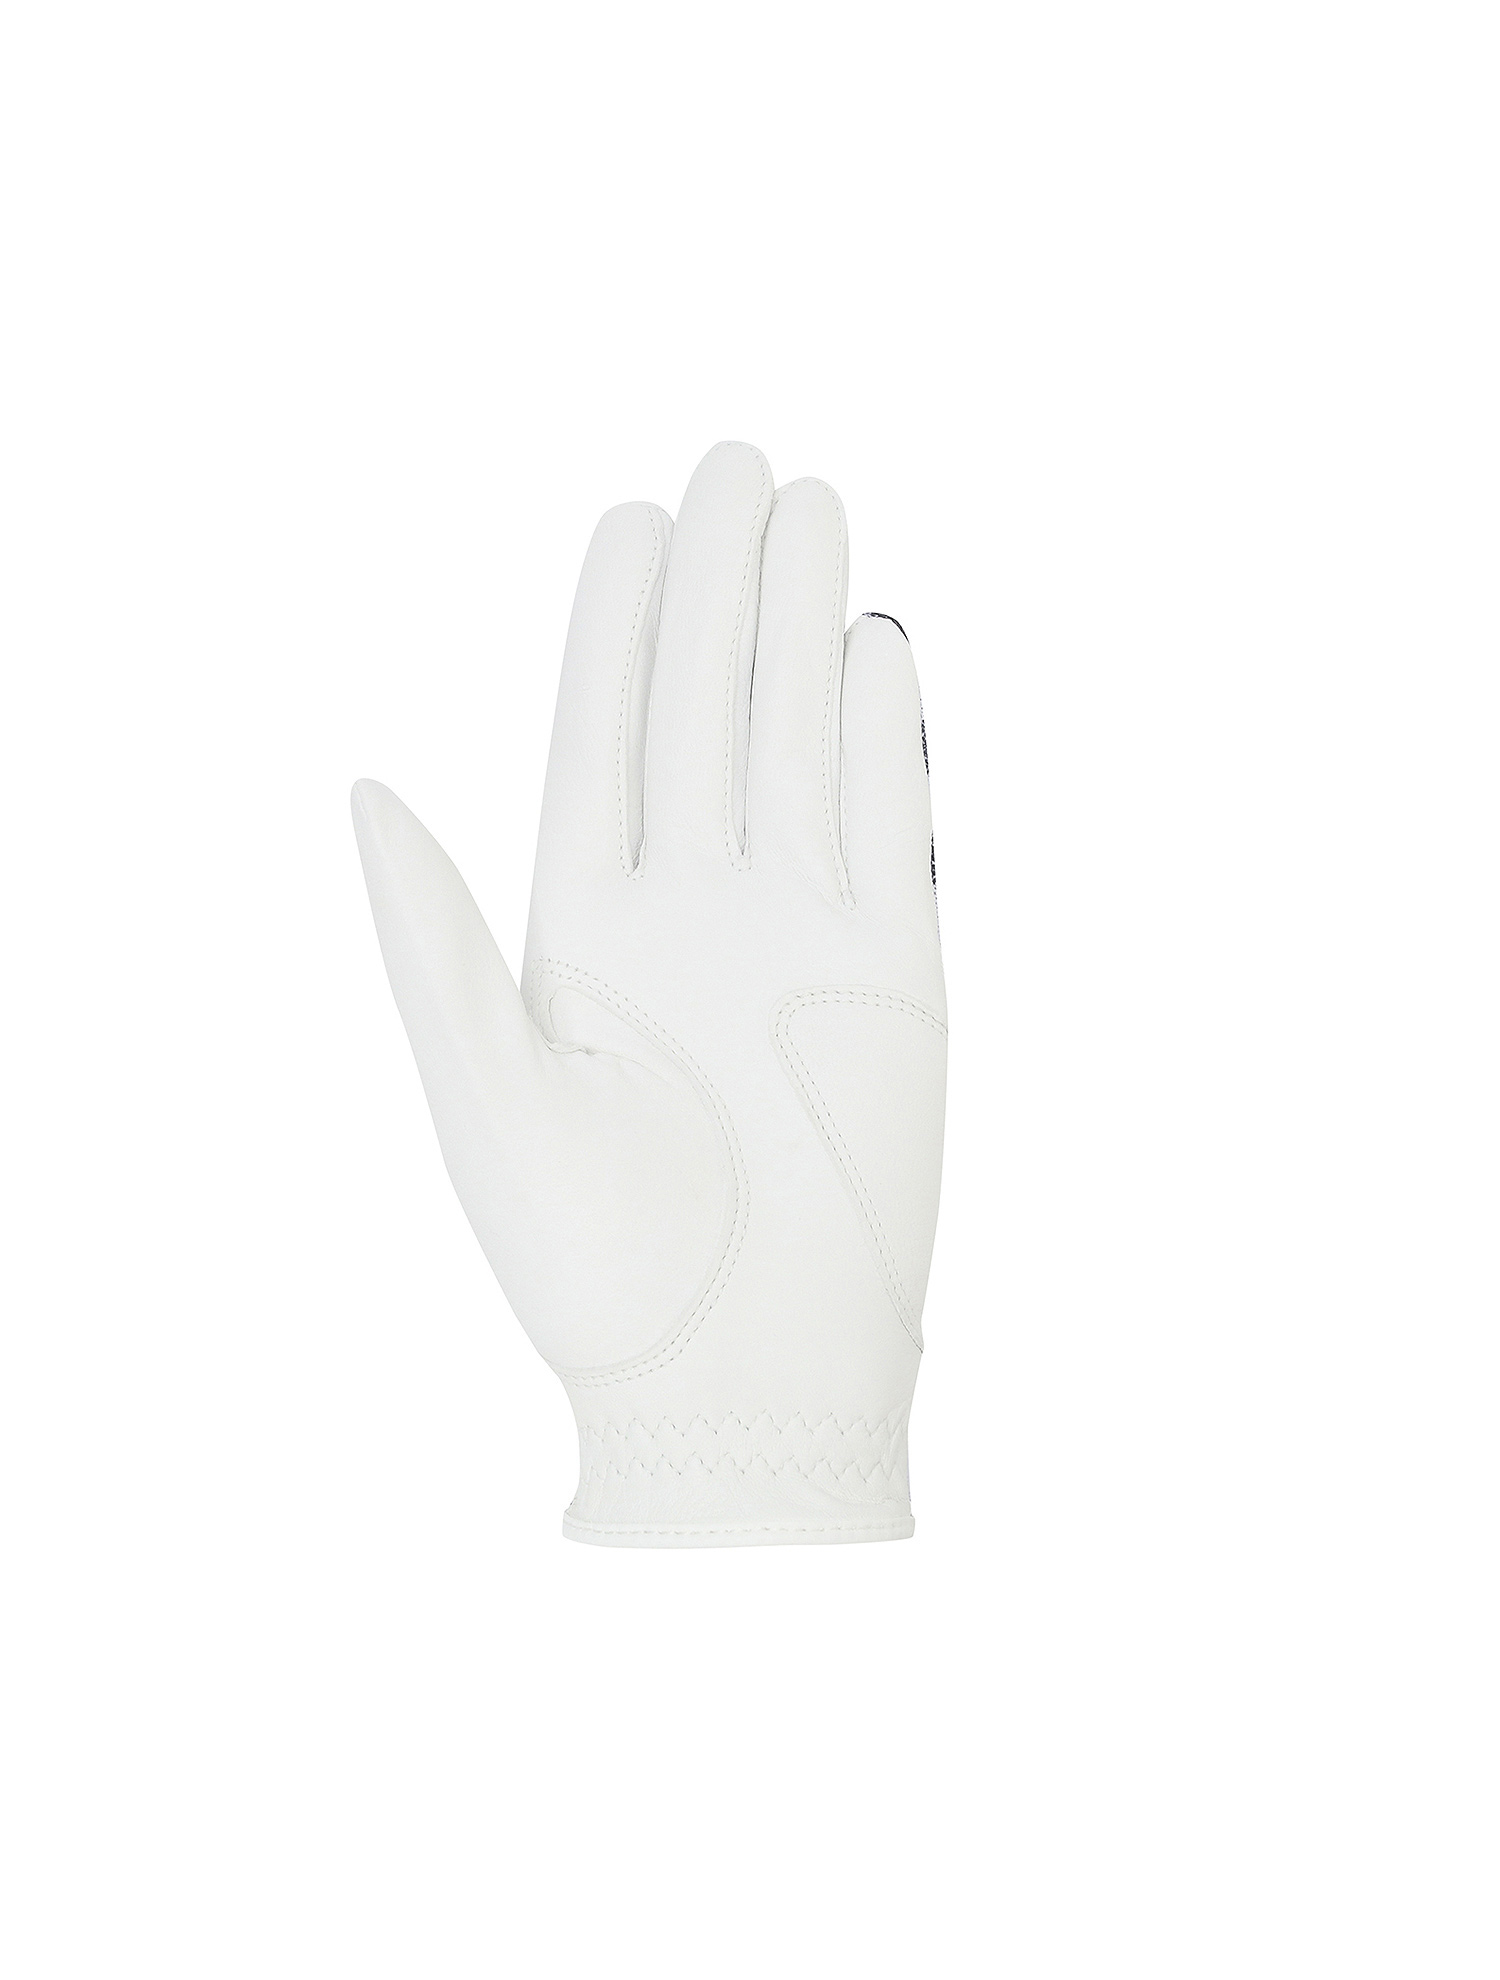 Gingham Check Mesh Gloves_Navy (QWAEGL20149)